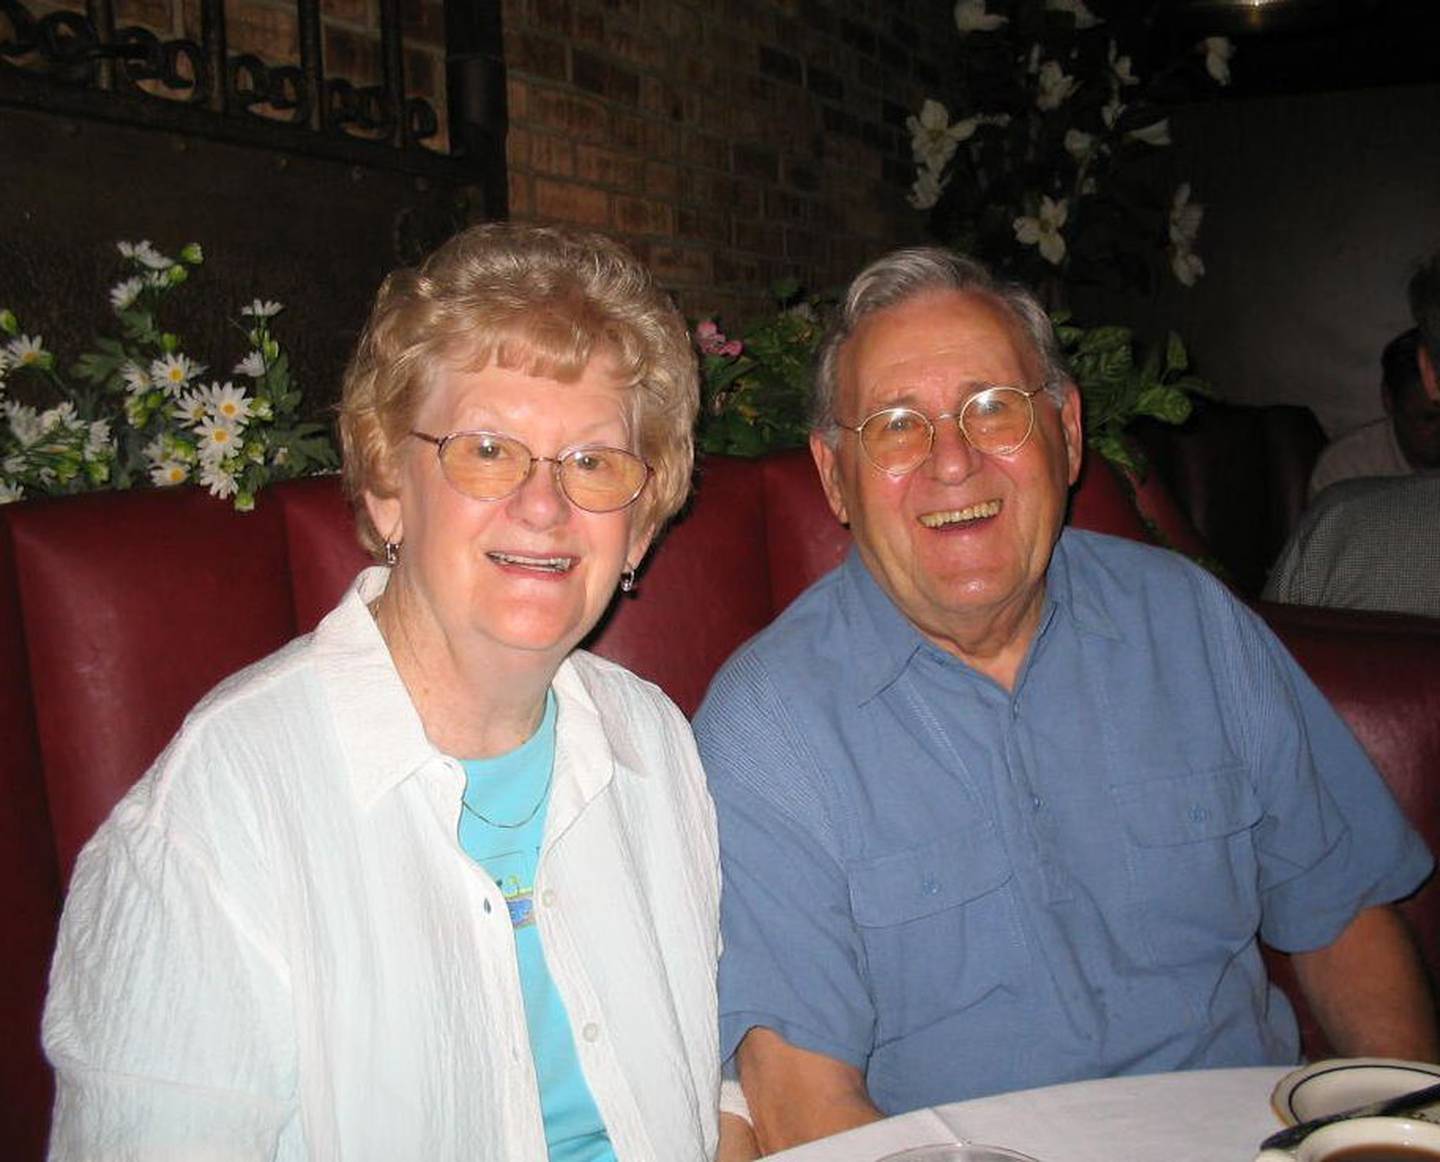 Glenn Masek of Joliet celebrated his 80th birthday with his wife Helen at Al’s Steak House in Joliet.